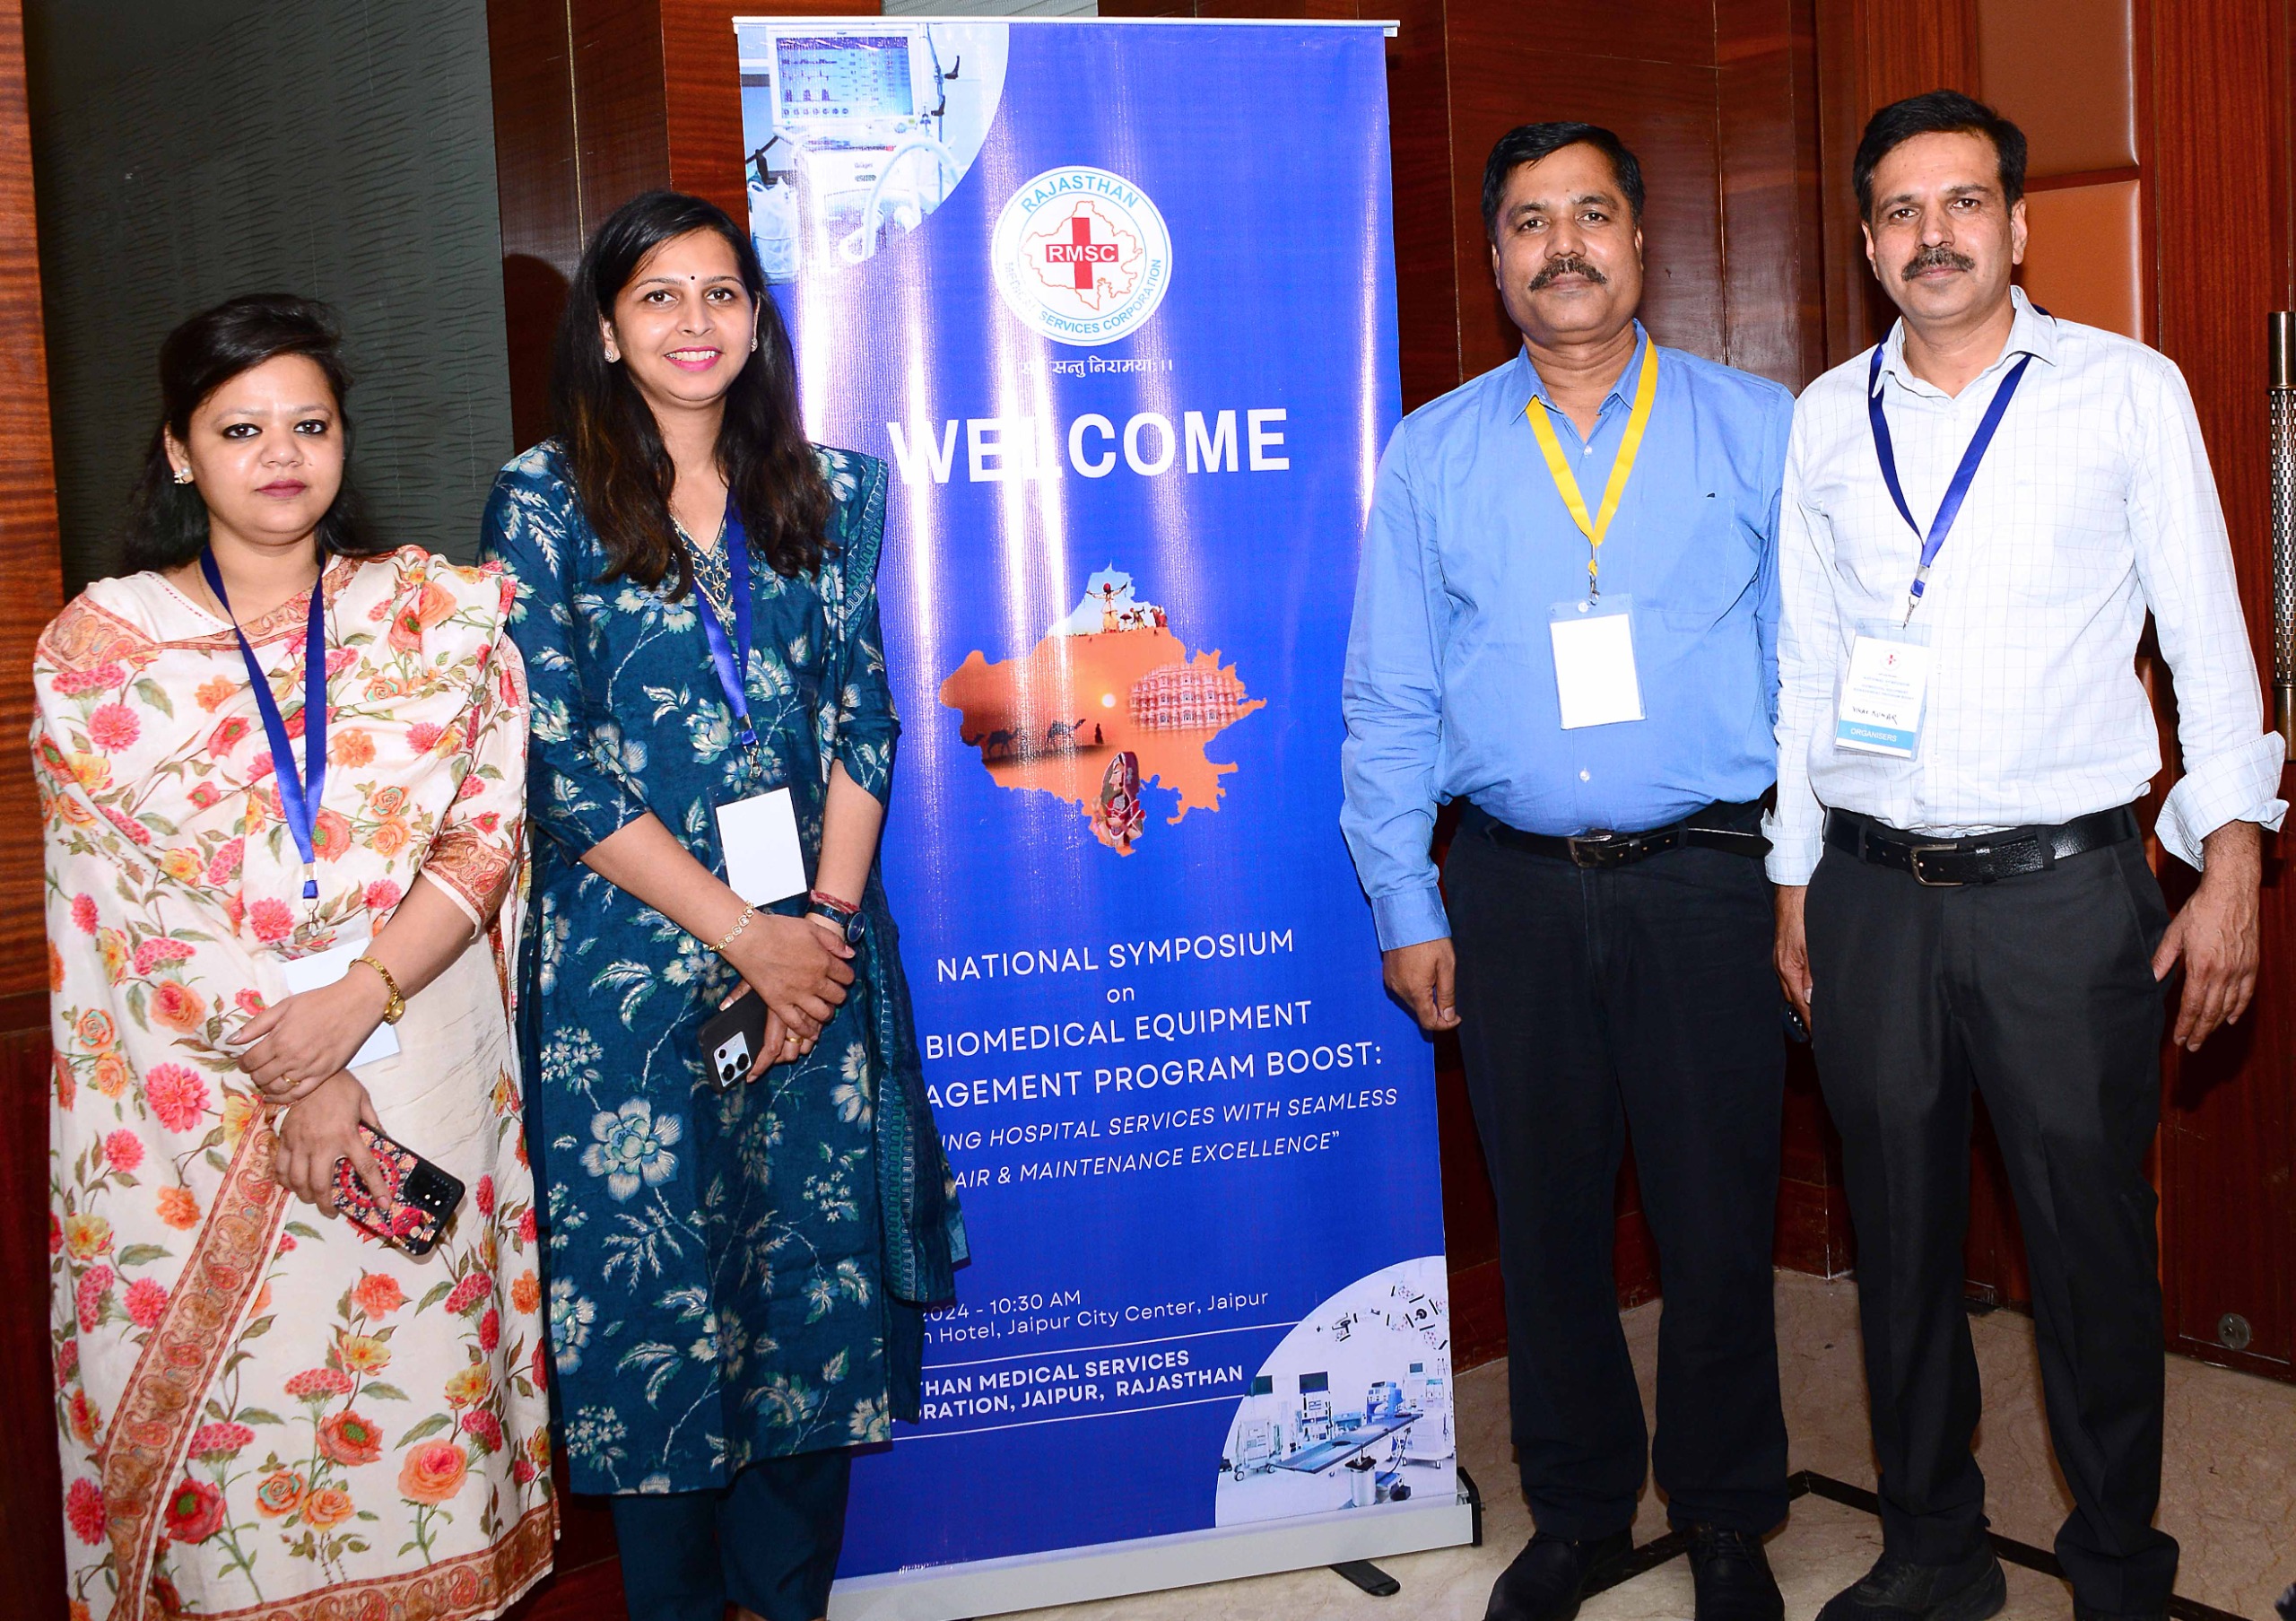 National symposium on Biomedical equipment management program boost